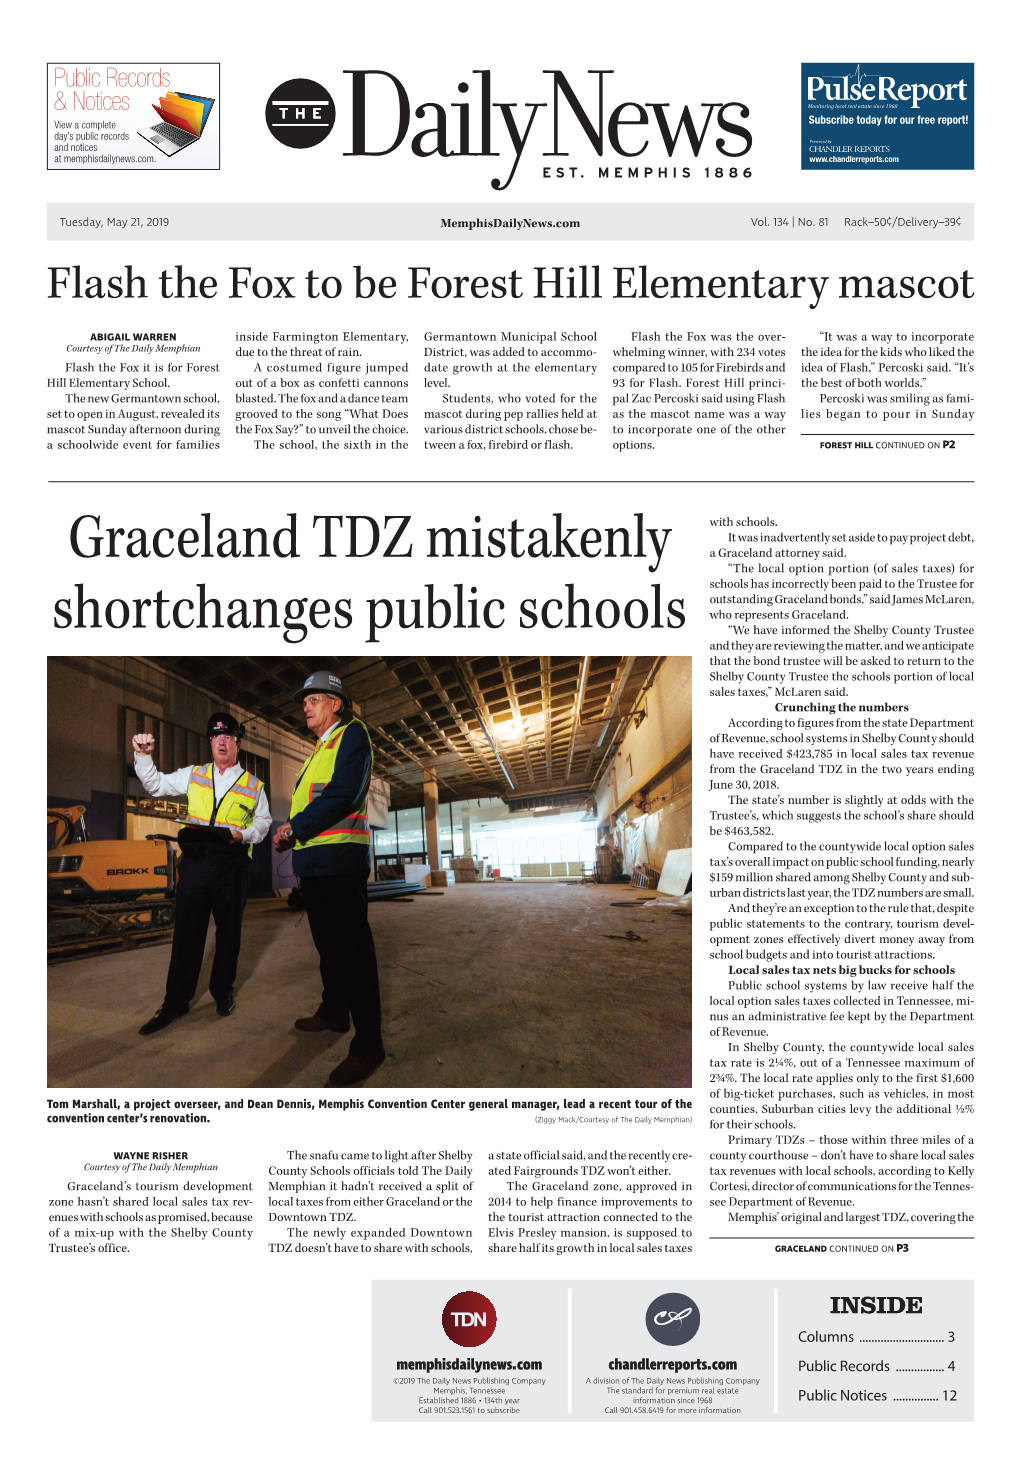 Graceland TDZ Mistakenly Shortchanges Public Schools